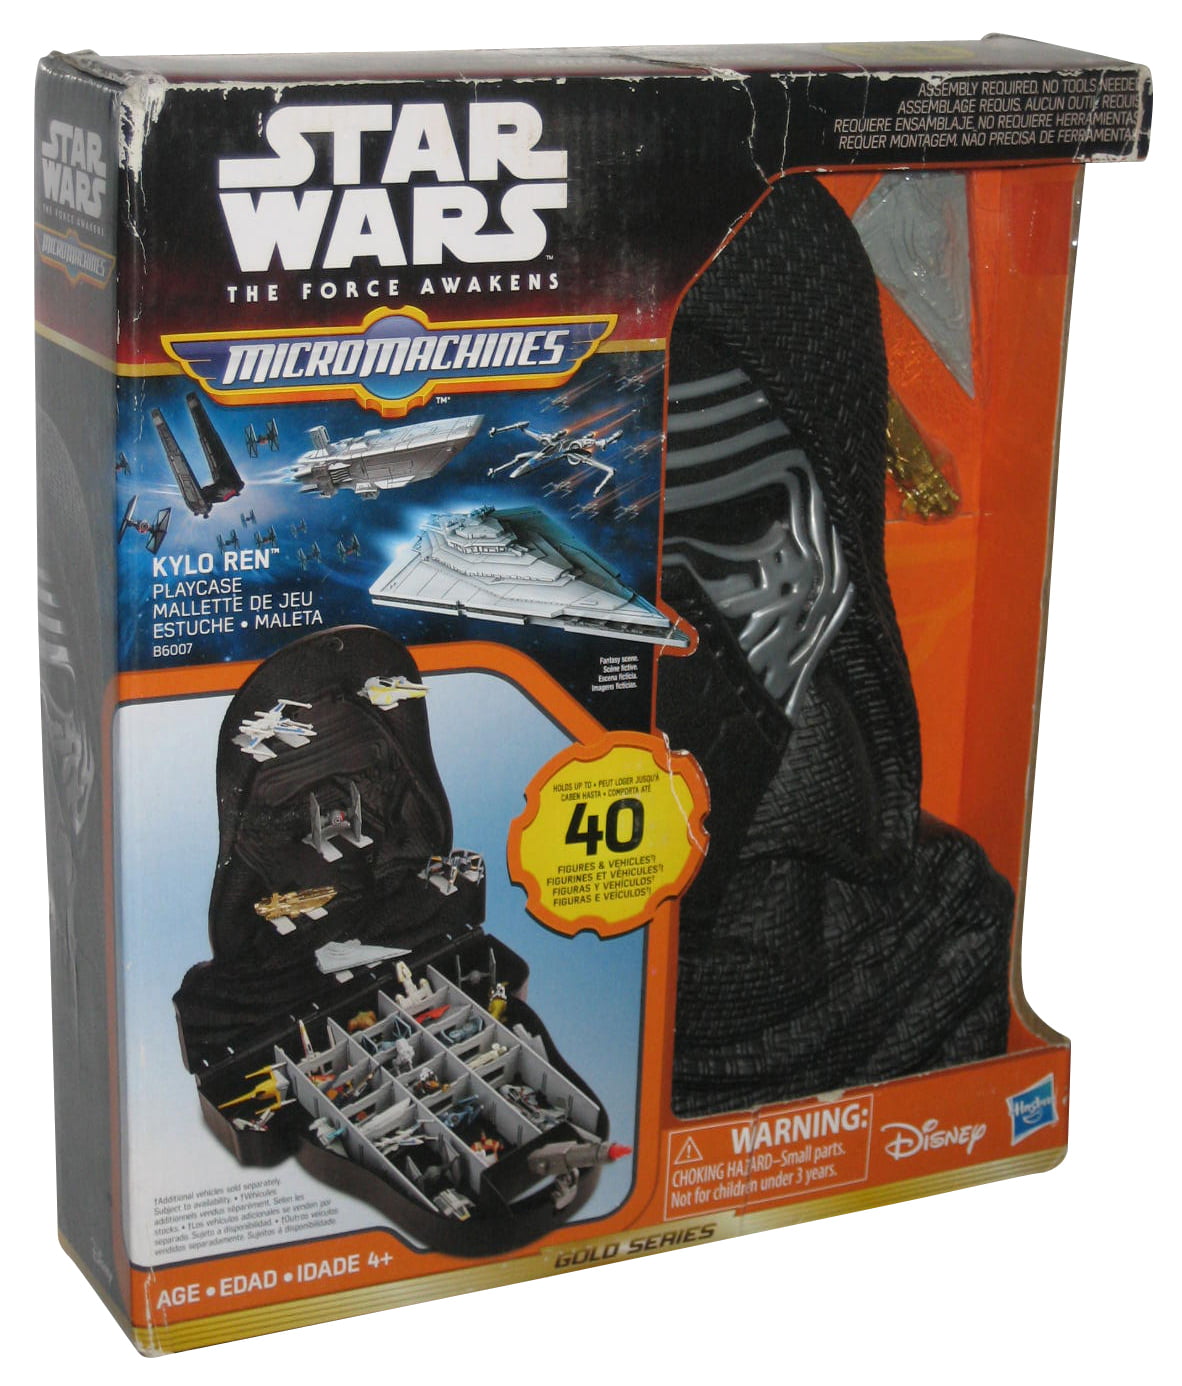 NEW Star Wars The Force Awakens Micro Machines Playset 